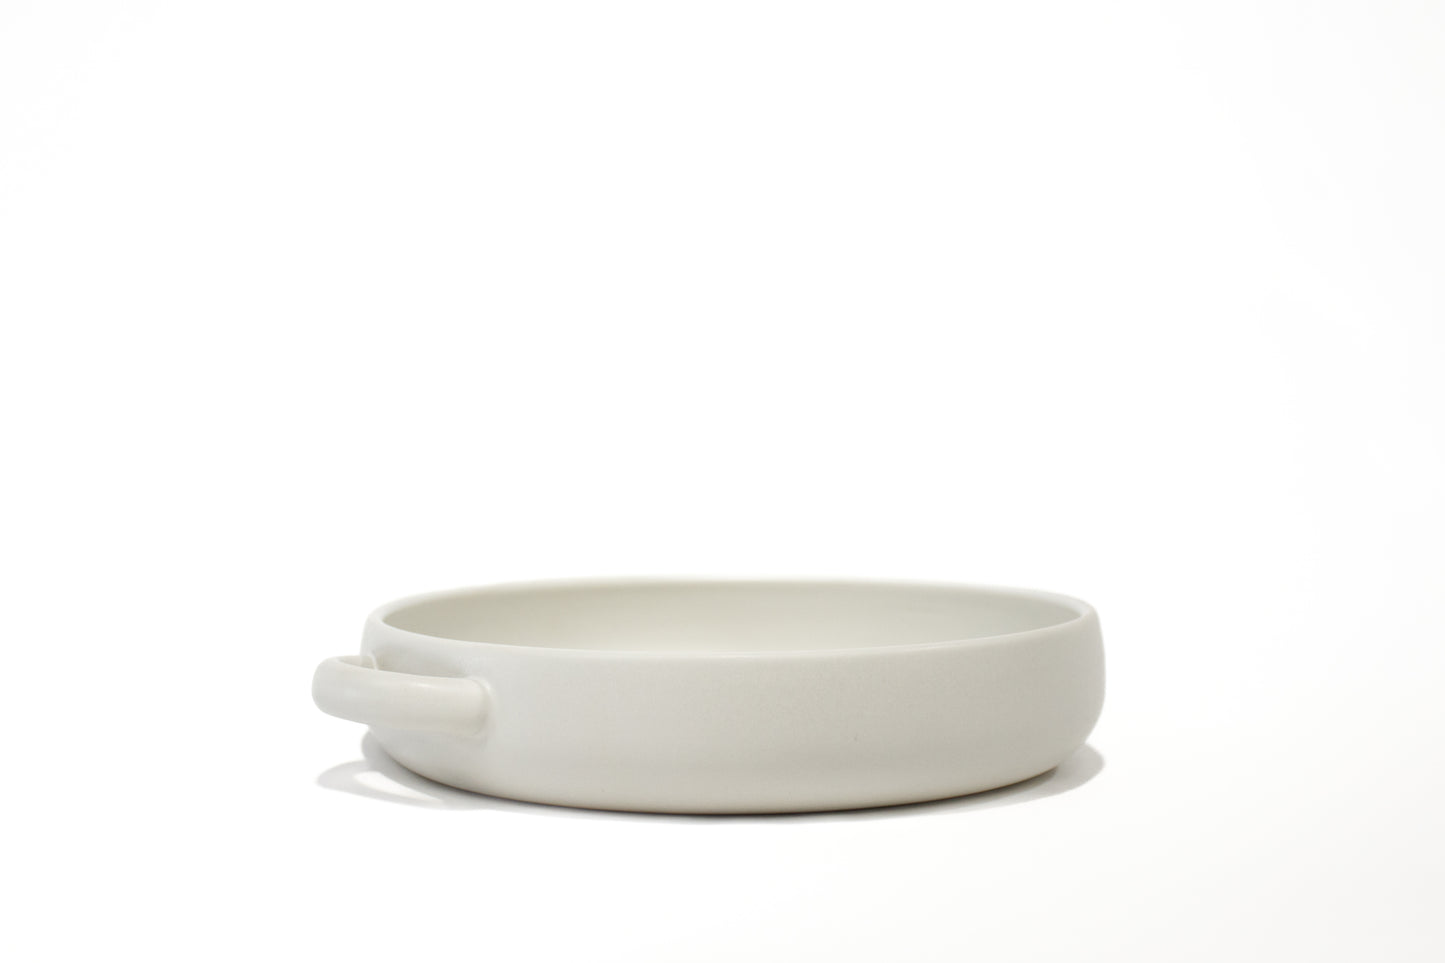 dinner plate w/handles - white